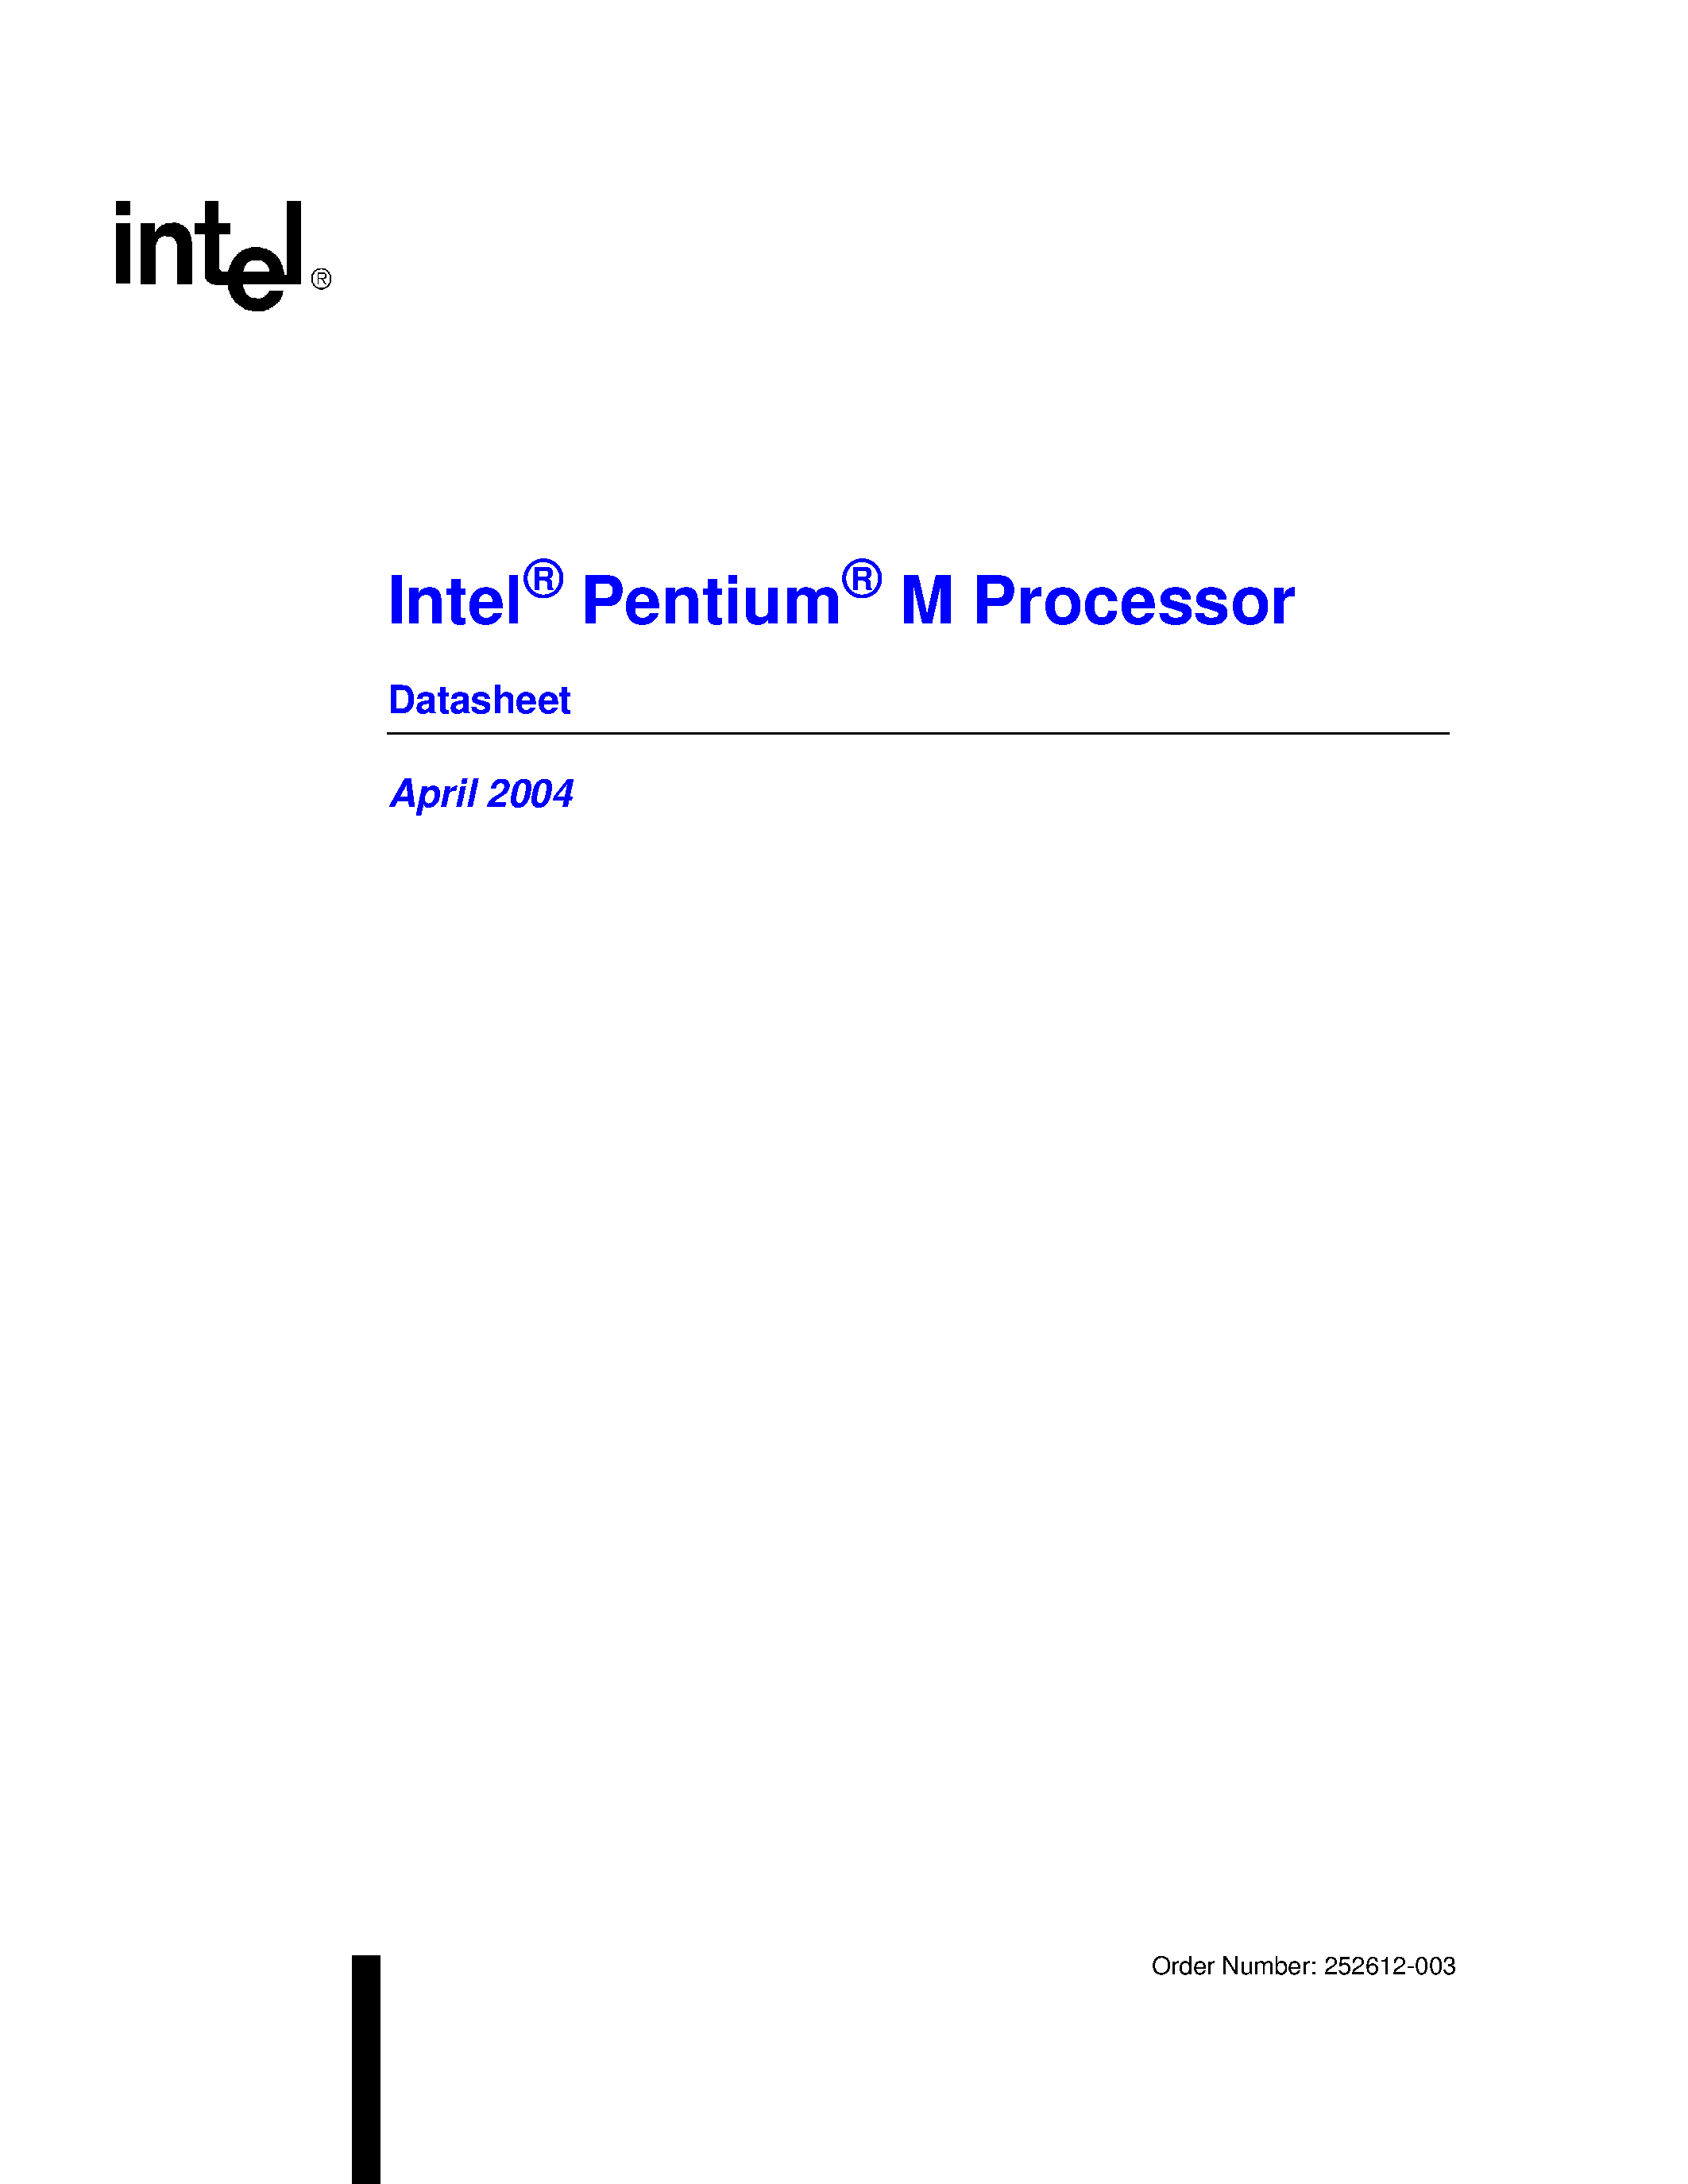 Datasheet RJ80535 - Pentium M Processor page 1